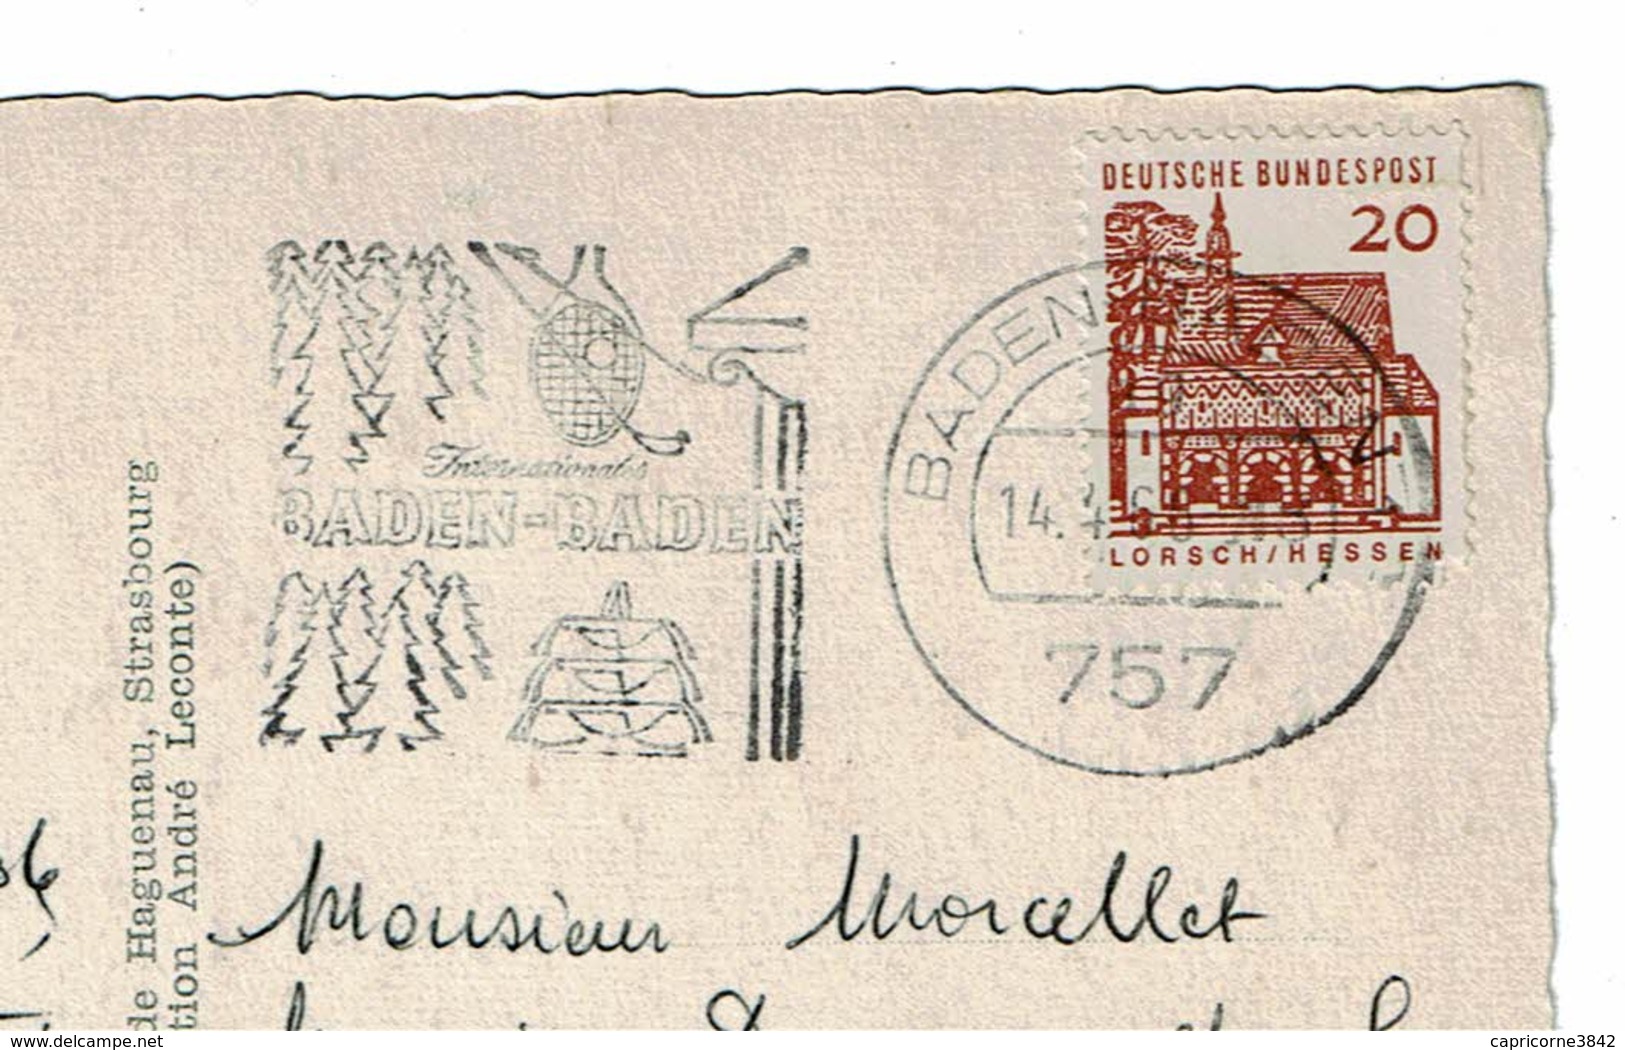 1966 - Carte Postale De BADEN BADEN Pour La France - Tp N° Yvert 324 - Frankeermachines (EMA)